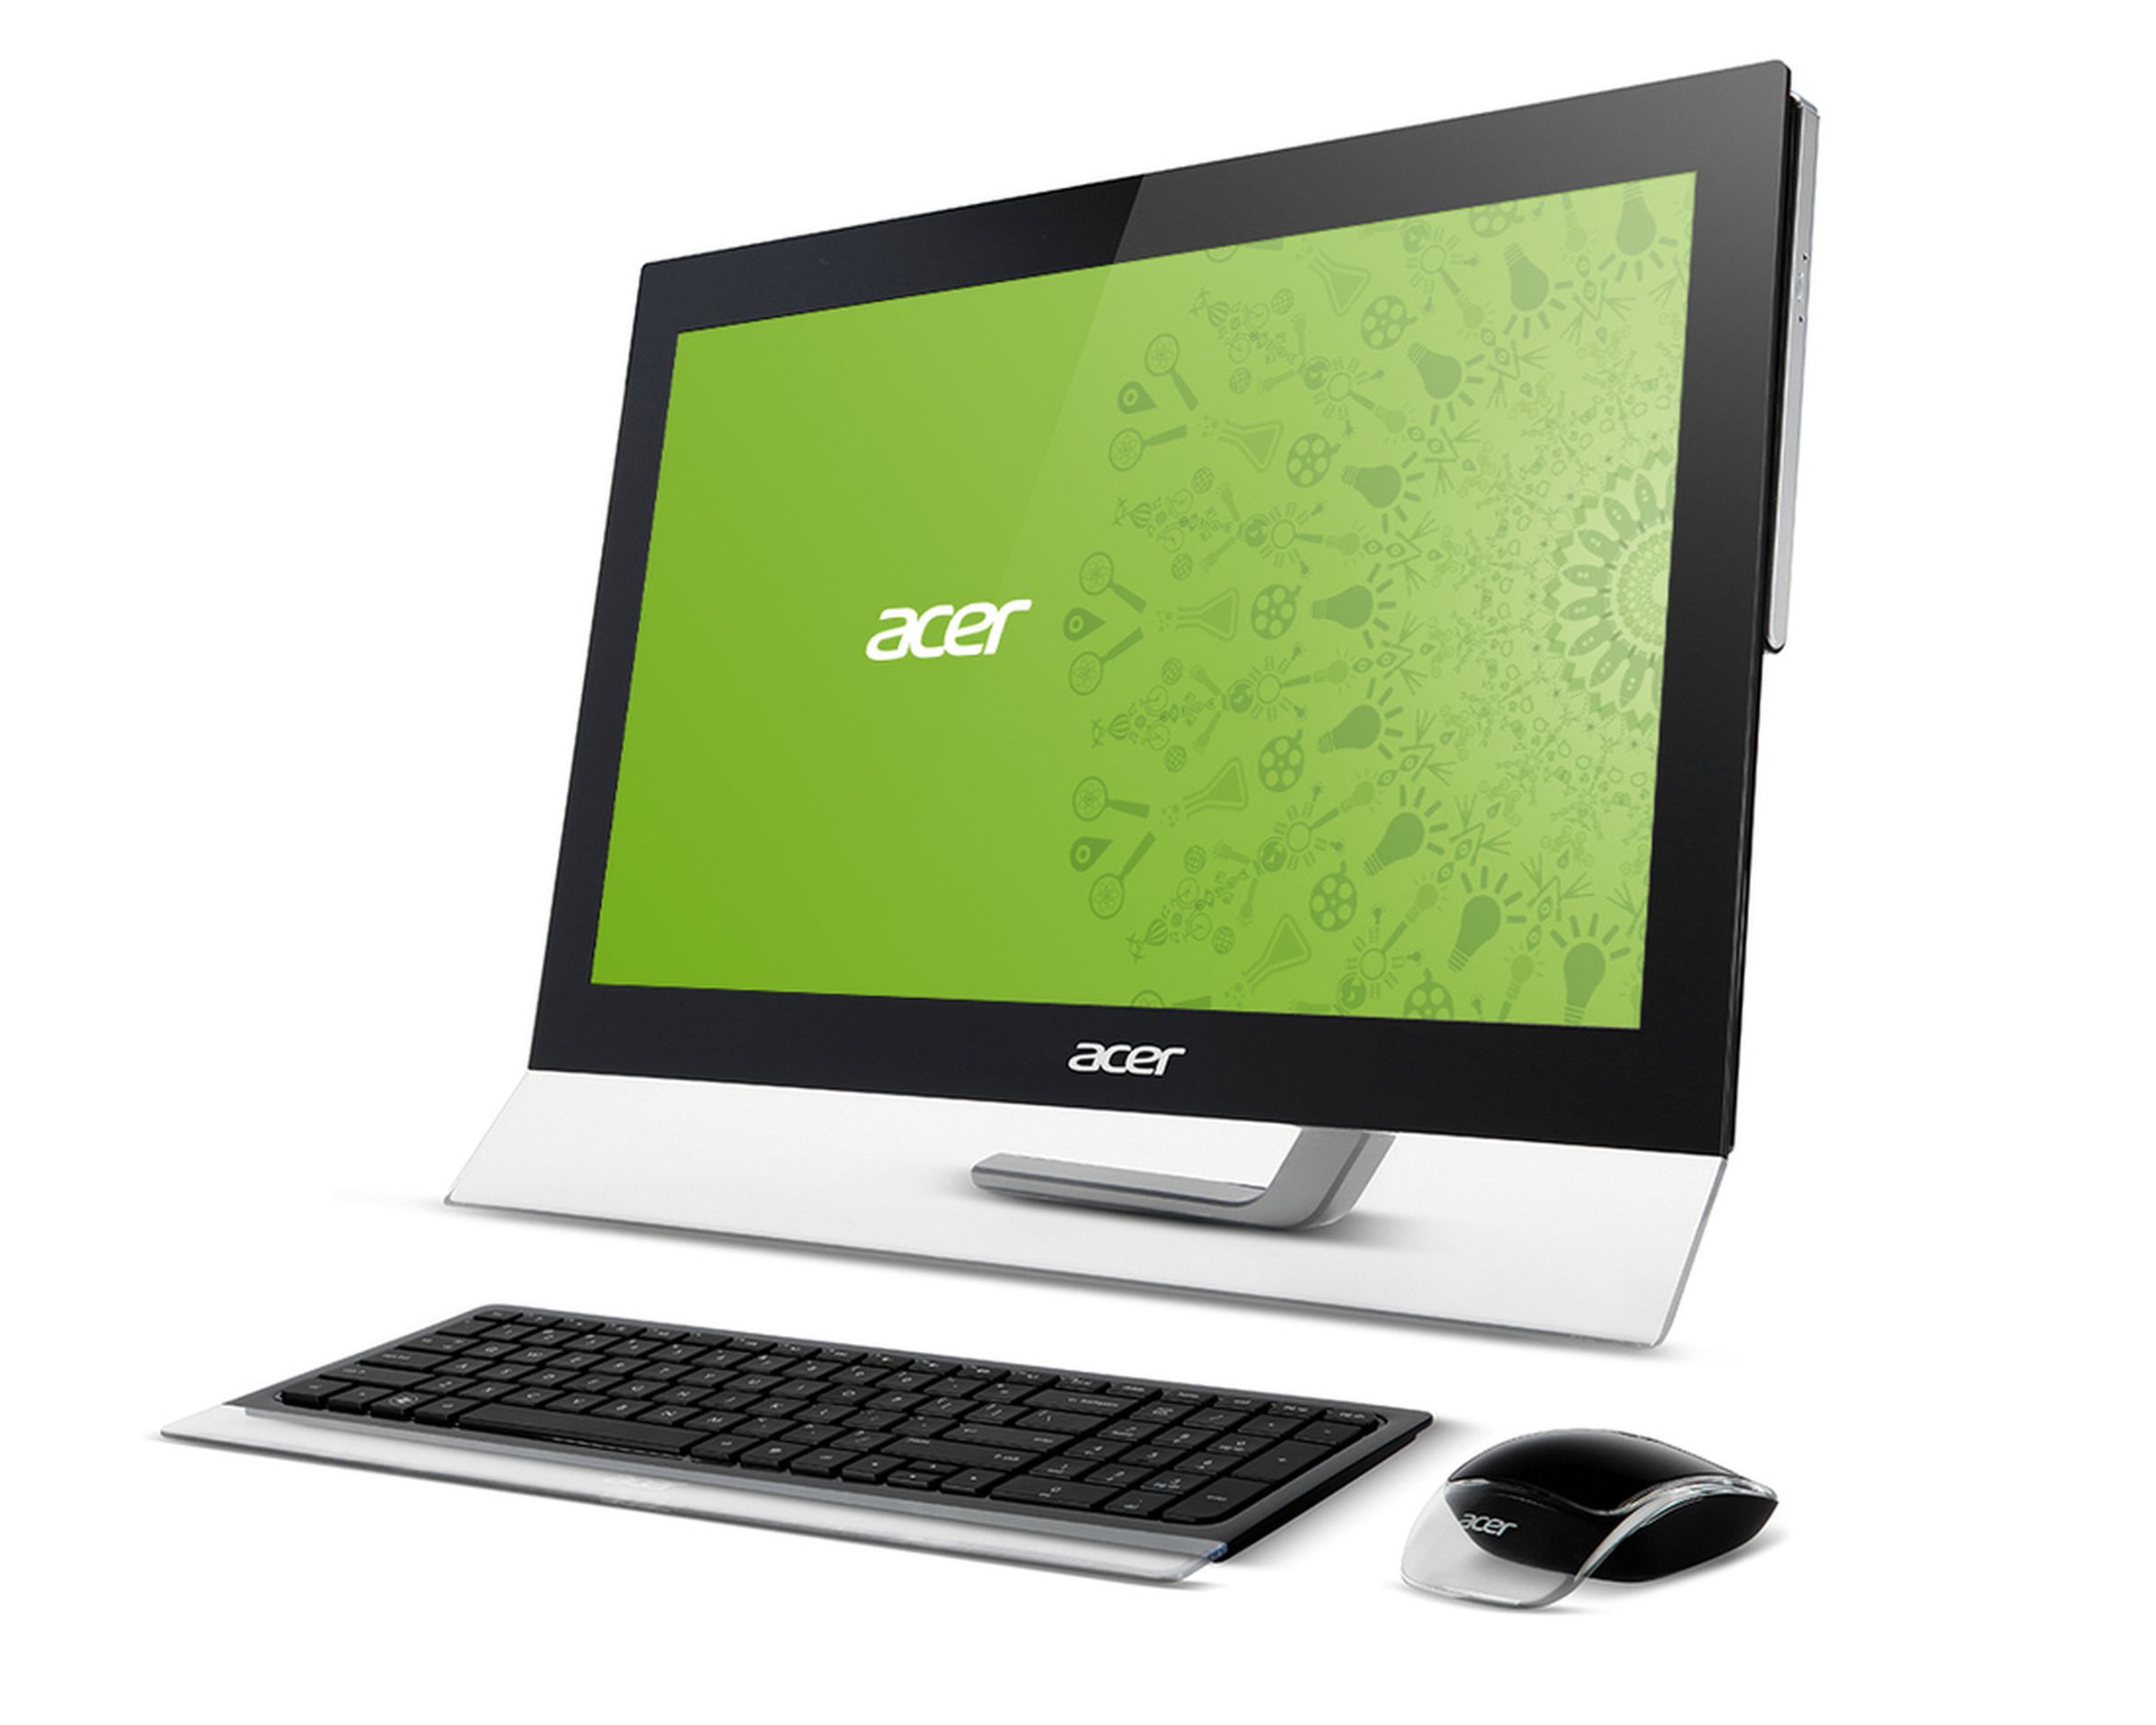 Acer Aspire 5600U Press Images